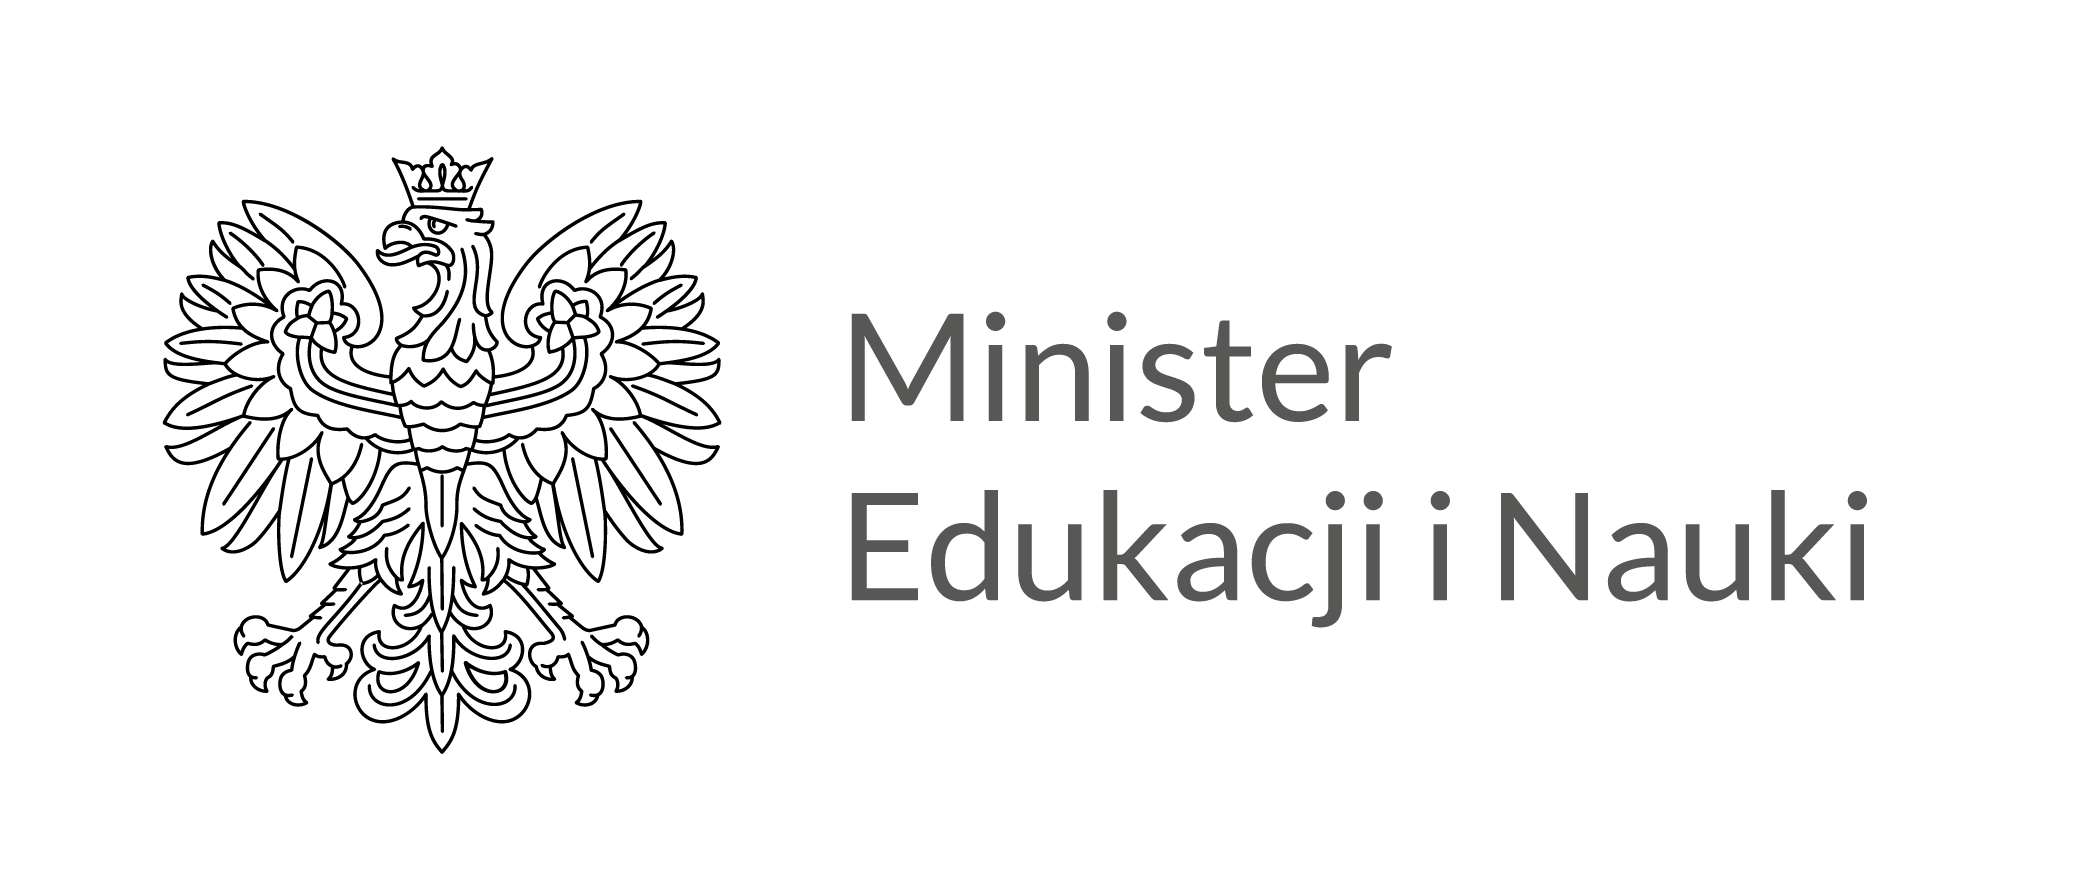 Minister Edukacji i Nauki logo pl